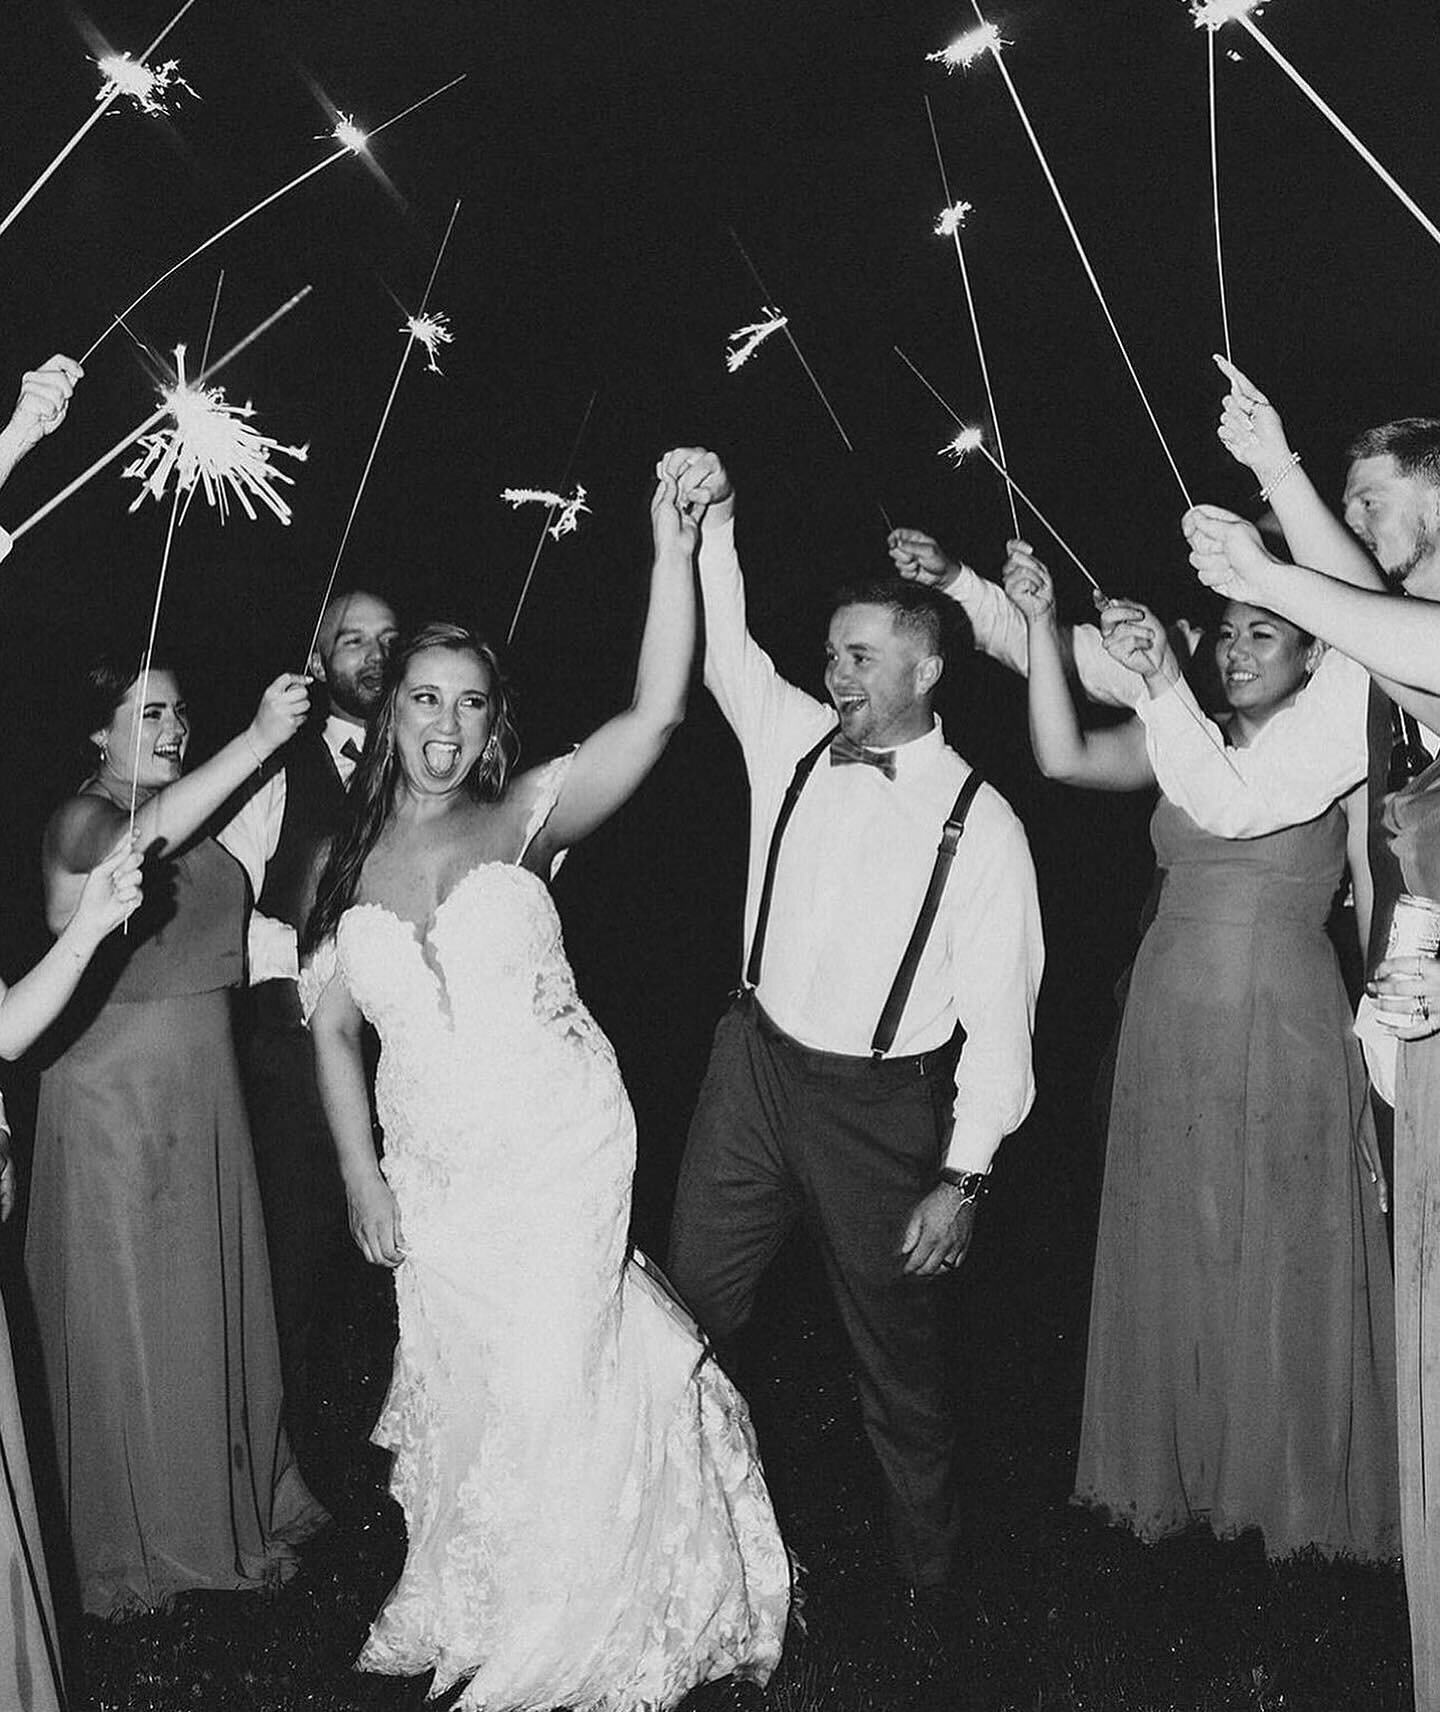 A sparkler send-off to complete the wedding day✨

@bridgetmcdonaldphotography 
@styledbylilysaratoga 
@true.beauty.co 
@miamanginomua 
@barnatlordhowevalley 
@amyprastio 

#lilysaratoga #lilybride #weddingday #weddingexit #sparklersendoff #martinalia